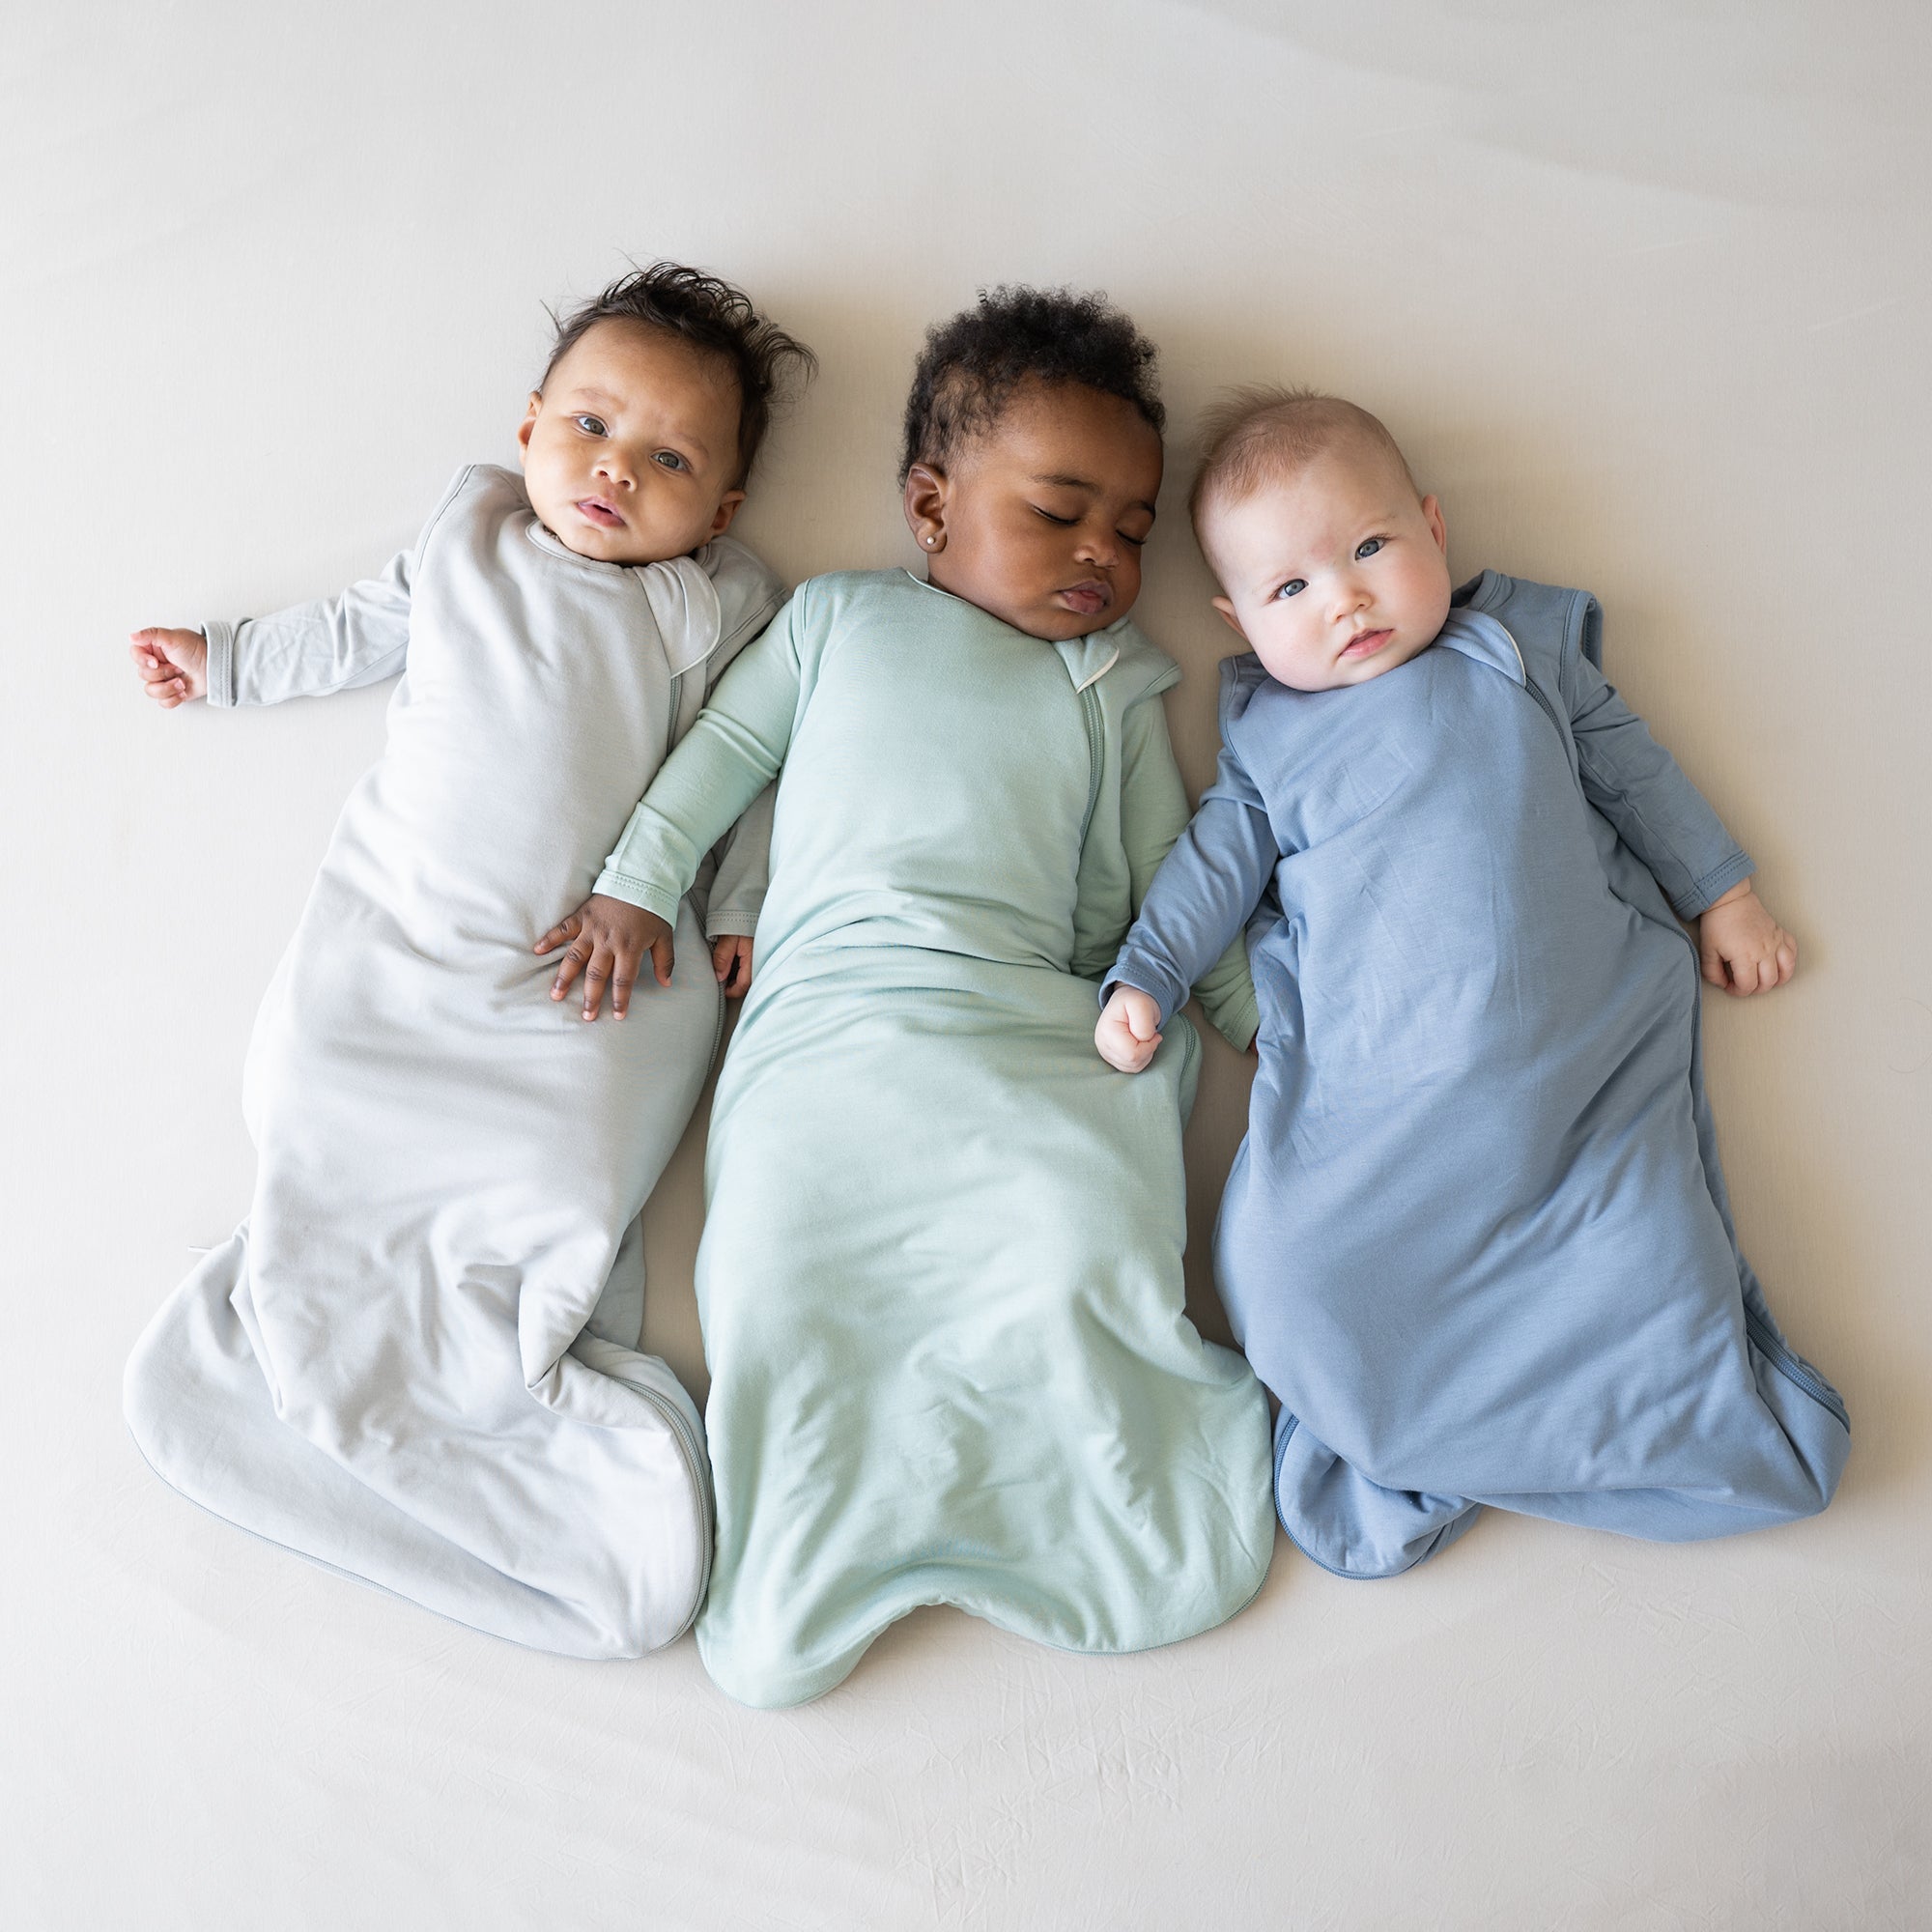 Are Infant Sleep Sacks Safe?